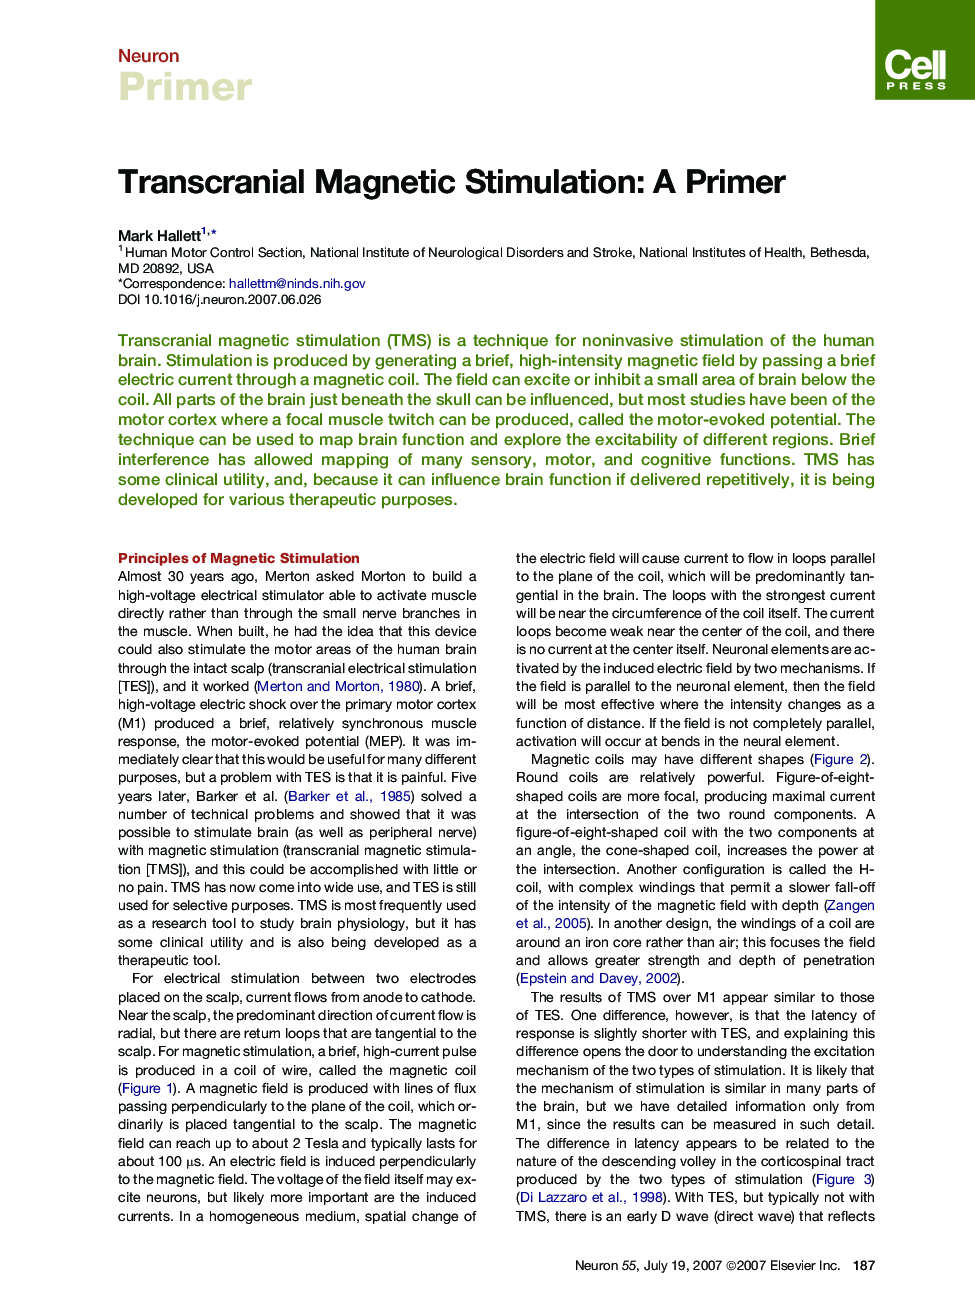 Transcranial Magnetic Stimulation: A Primer